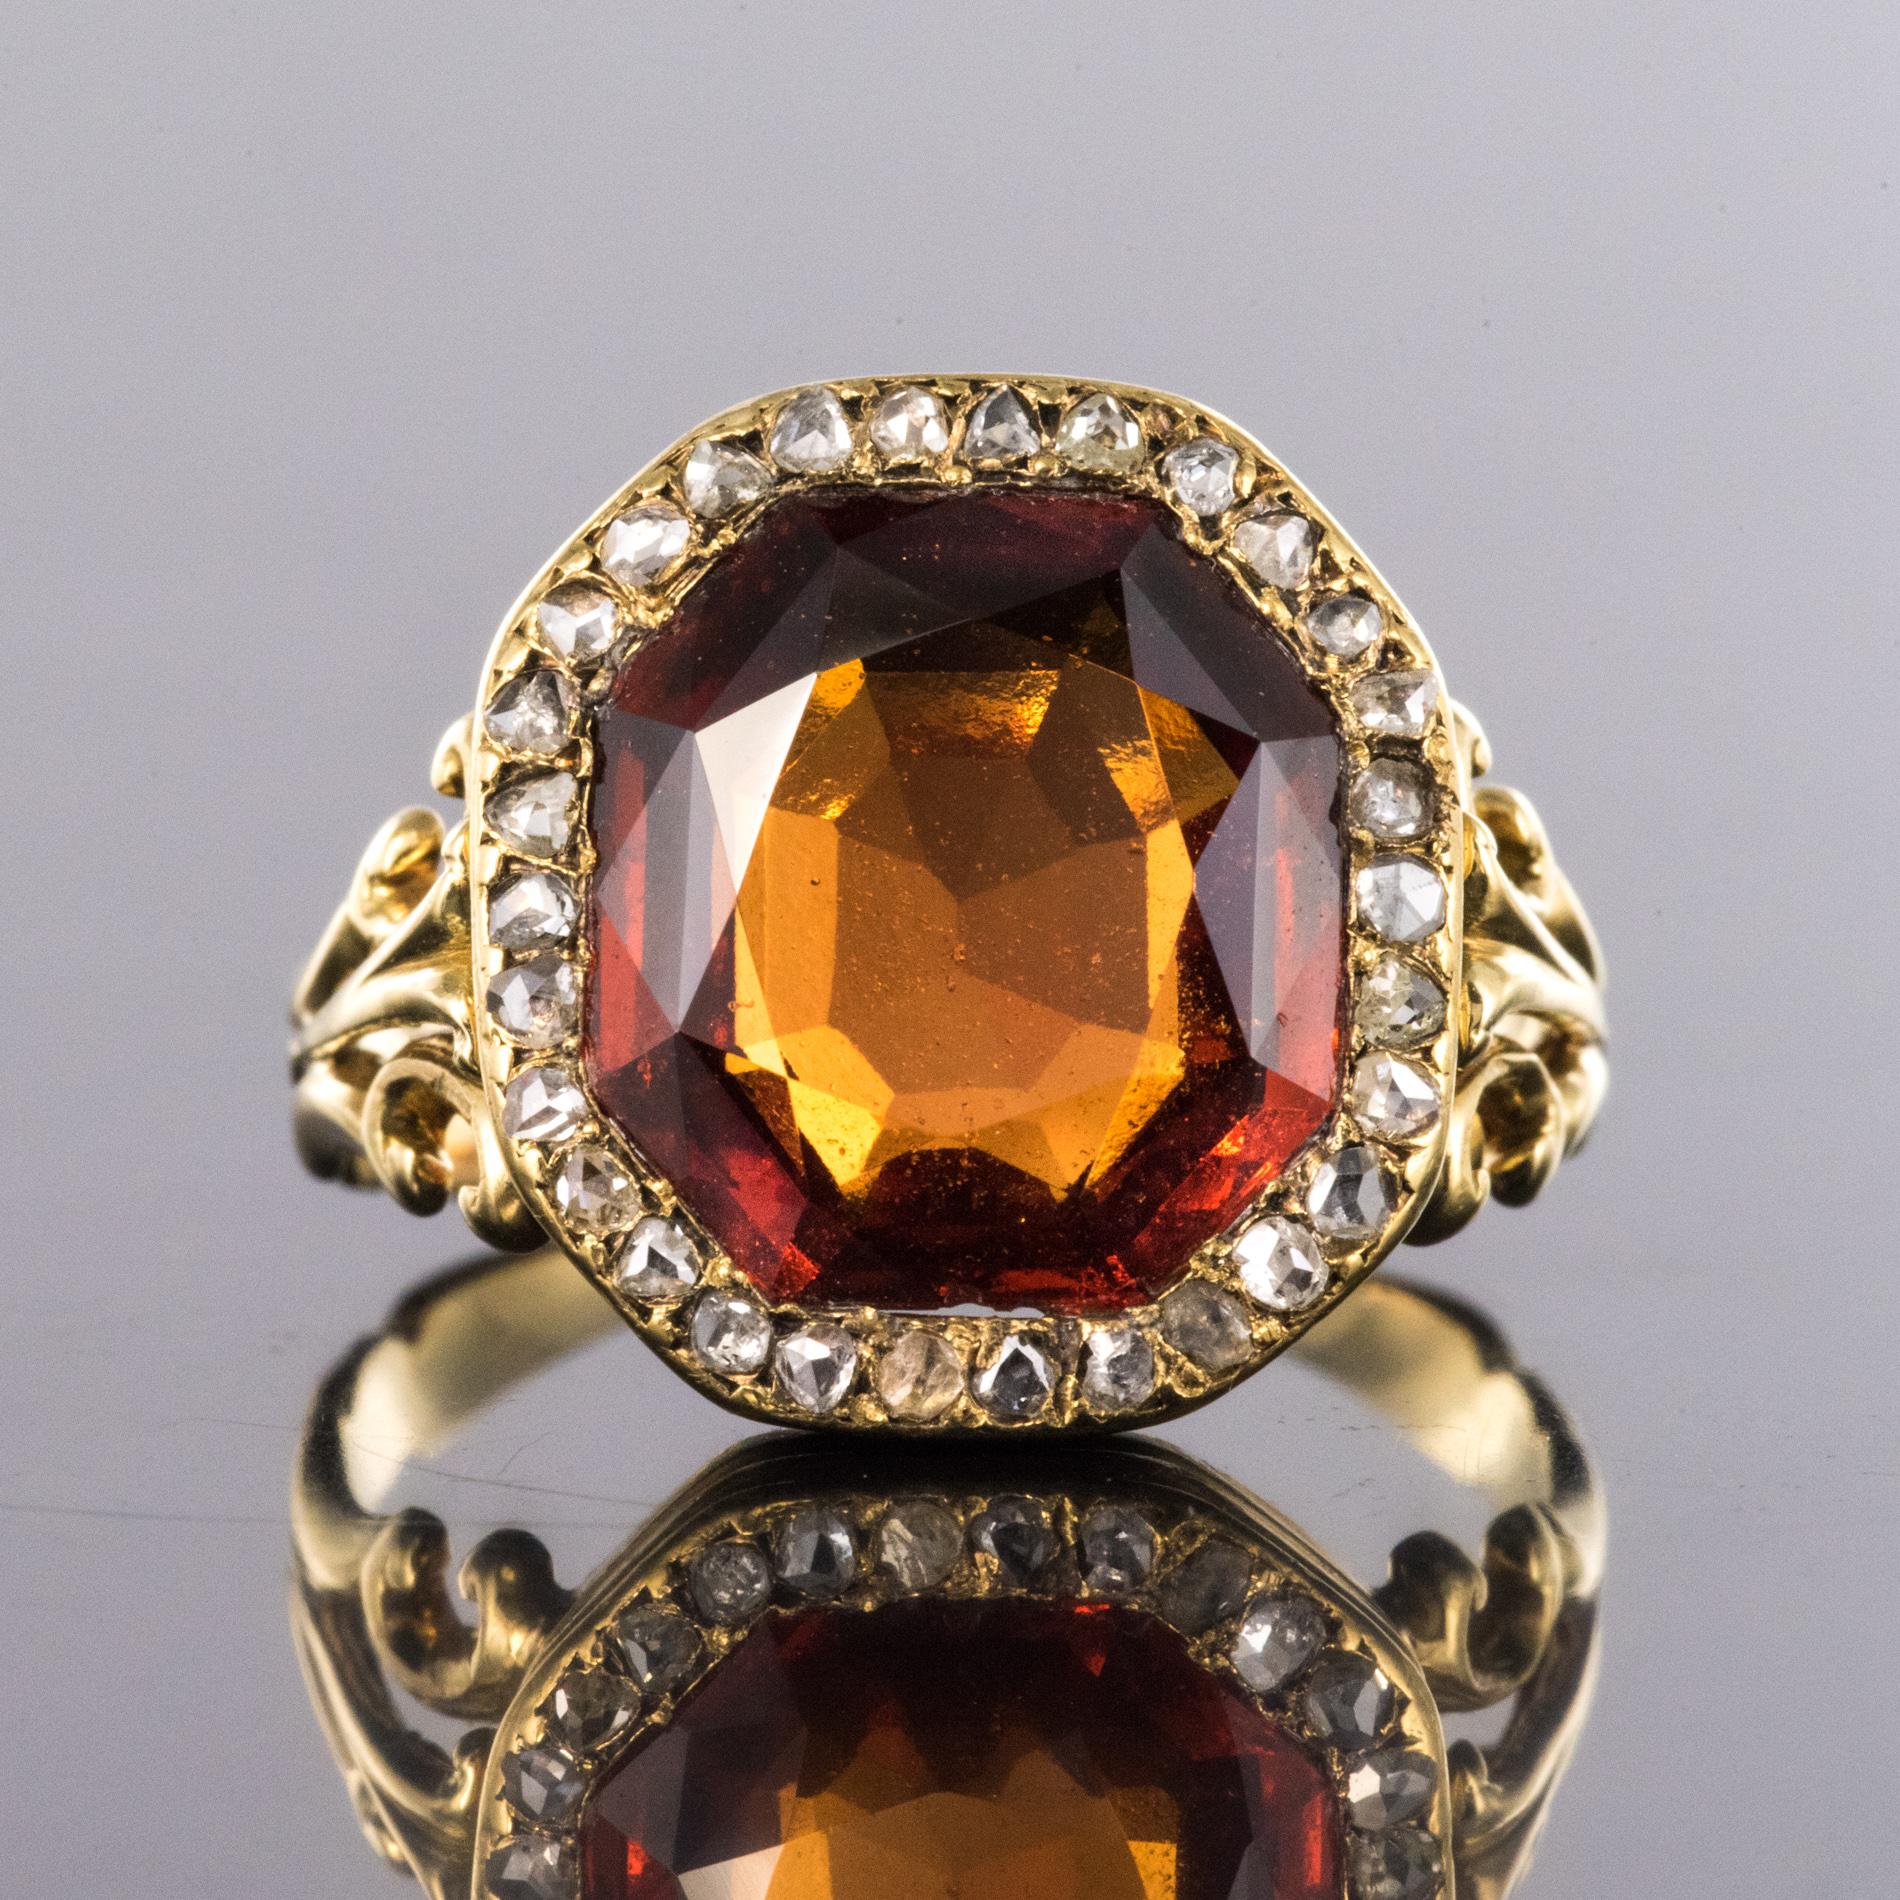 Napoleon III 19th Century French 6.20 Carat Hessonite Garnet Rose Cut Diamonds Antique Ring